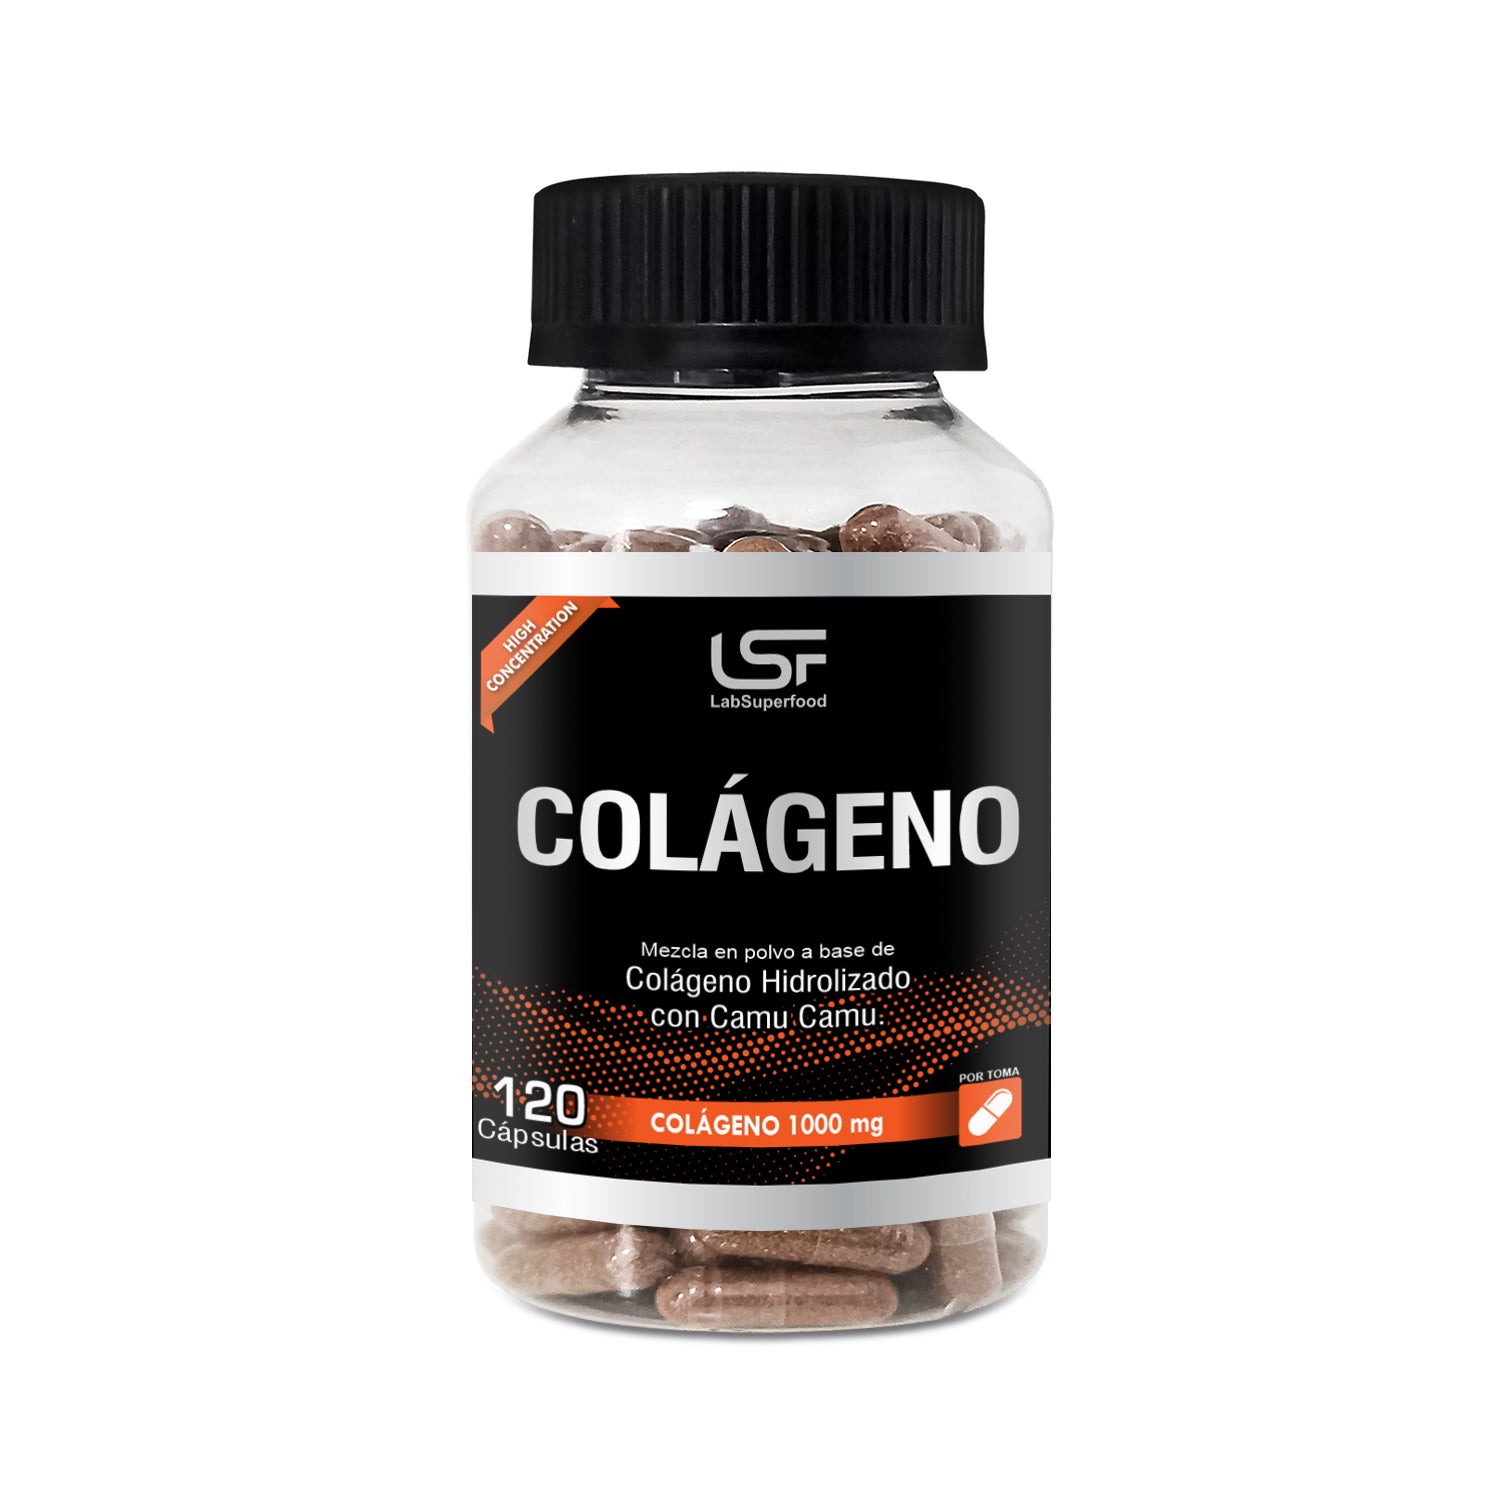 Collagen with Camu Camu - 120 capsules